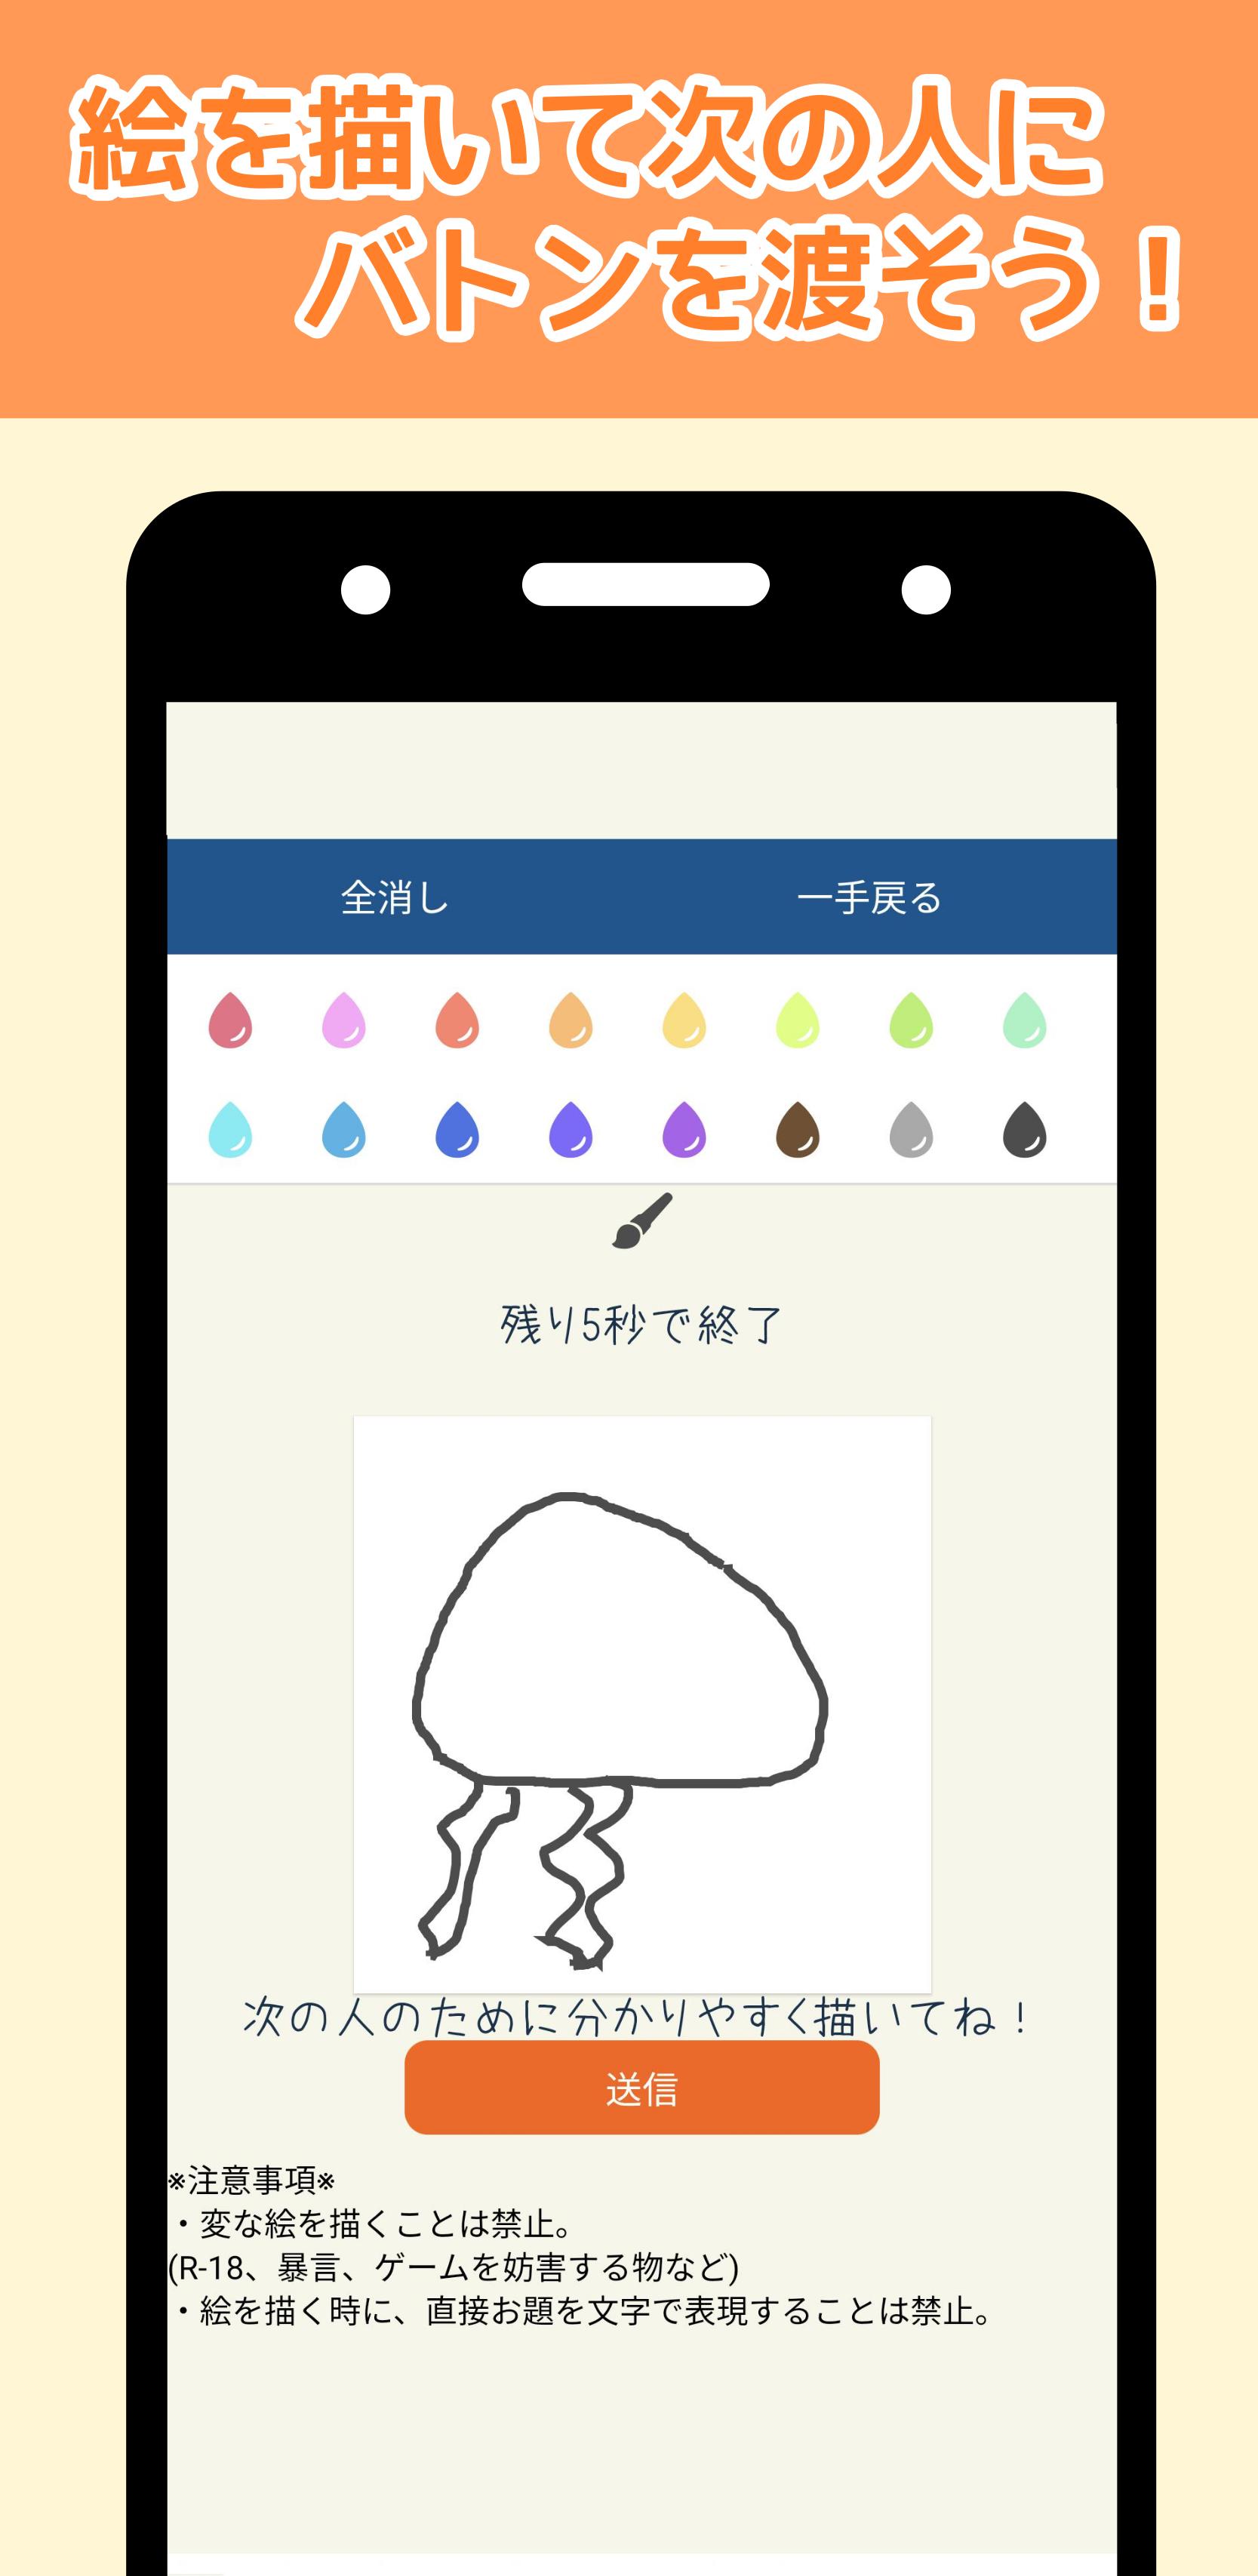 Android Indirme Icin お絵描き伝言ゲーム Apk